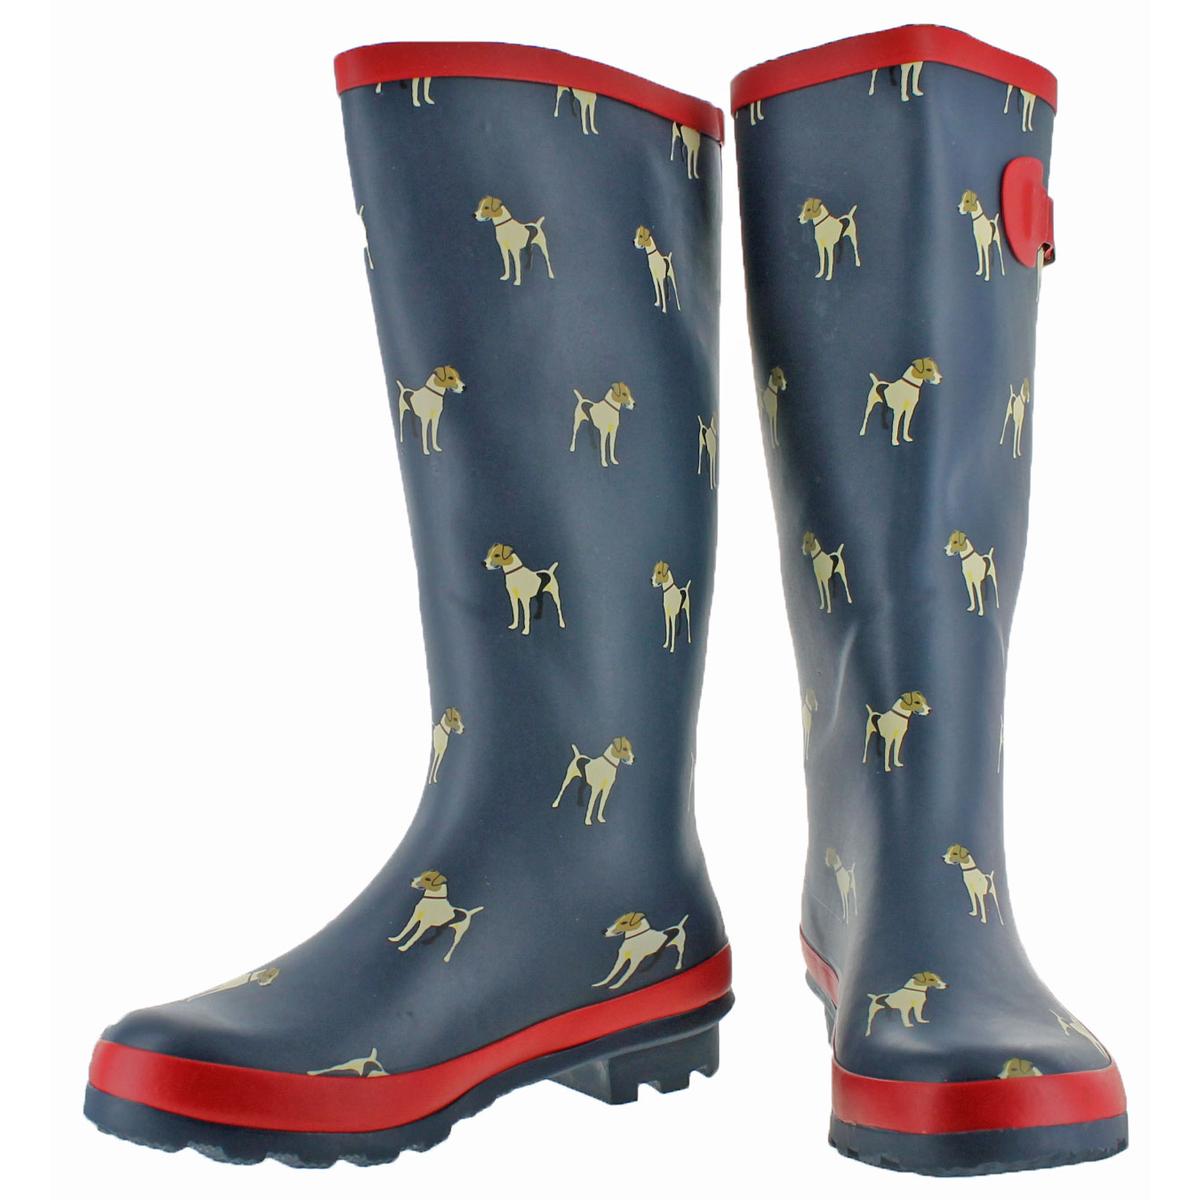 HENRY FERRERA Manchester Womens Waterproof Knee-High Rain Boots